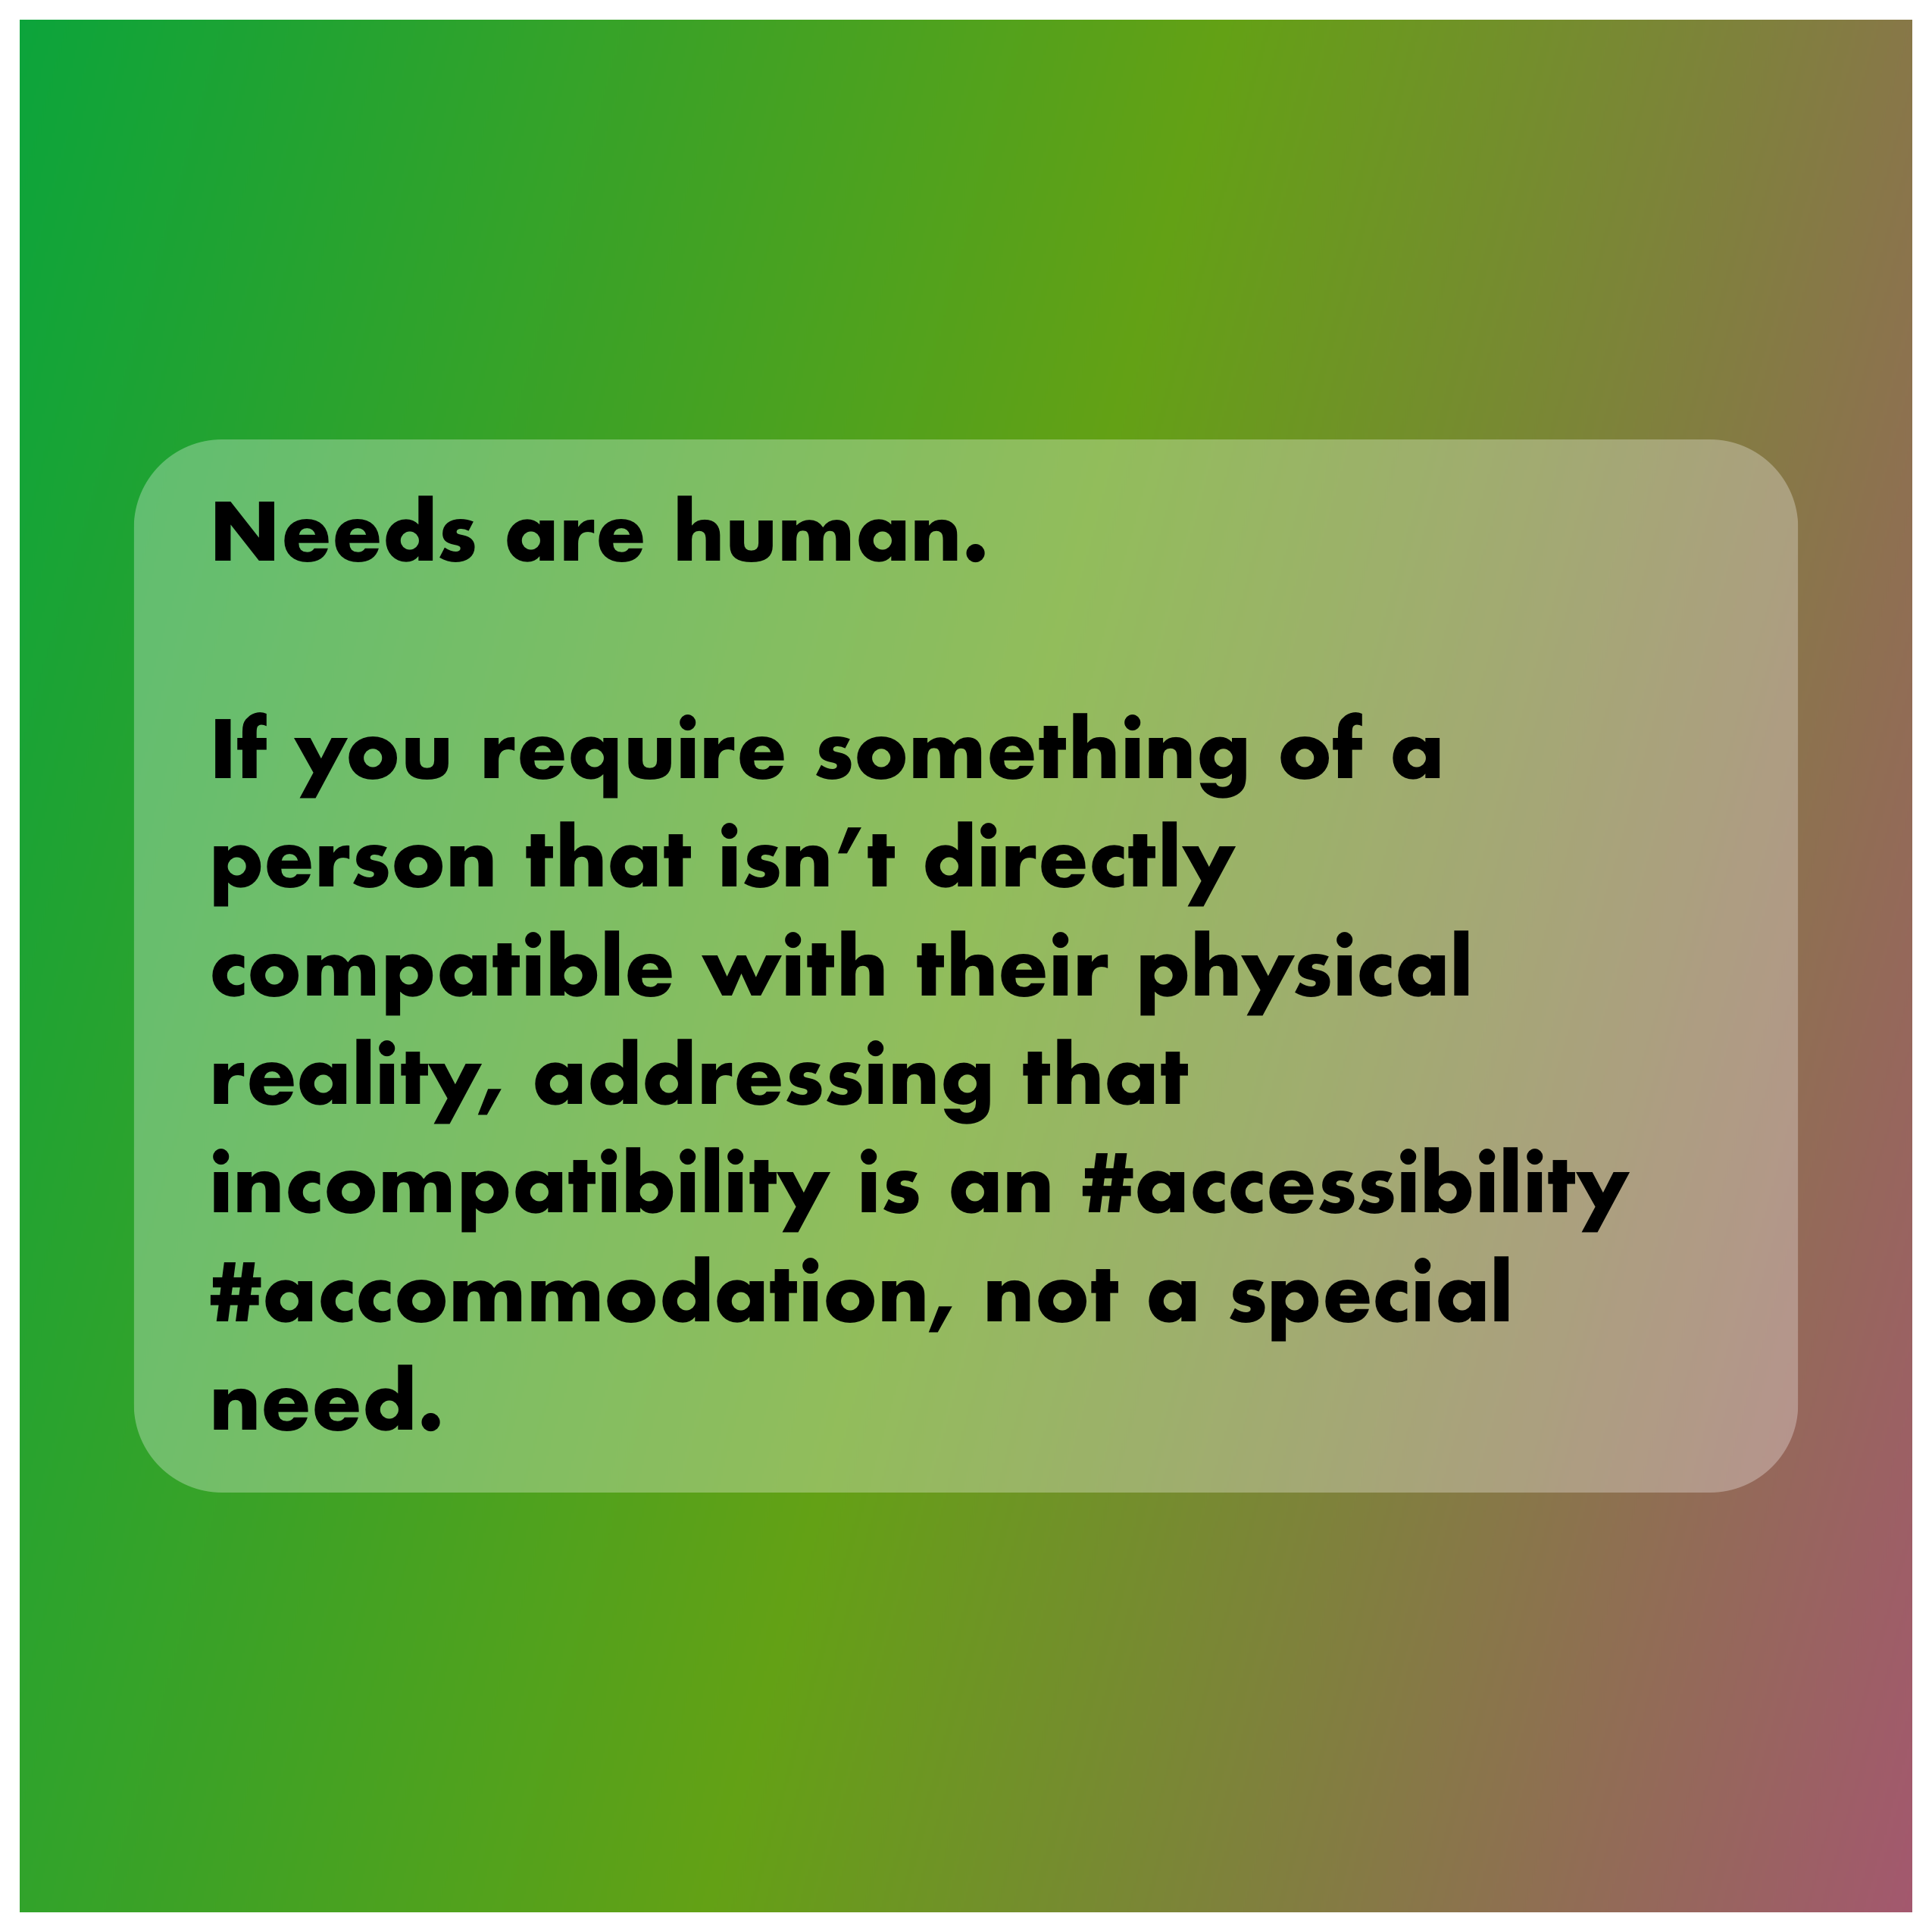 Needs are human